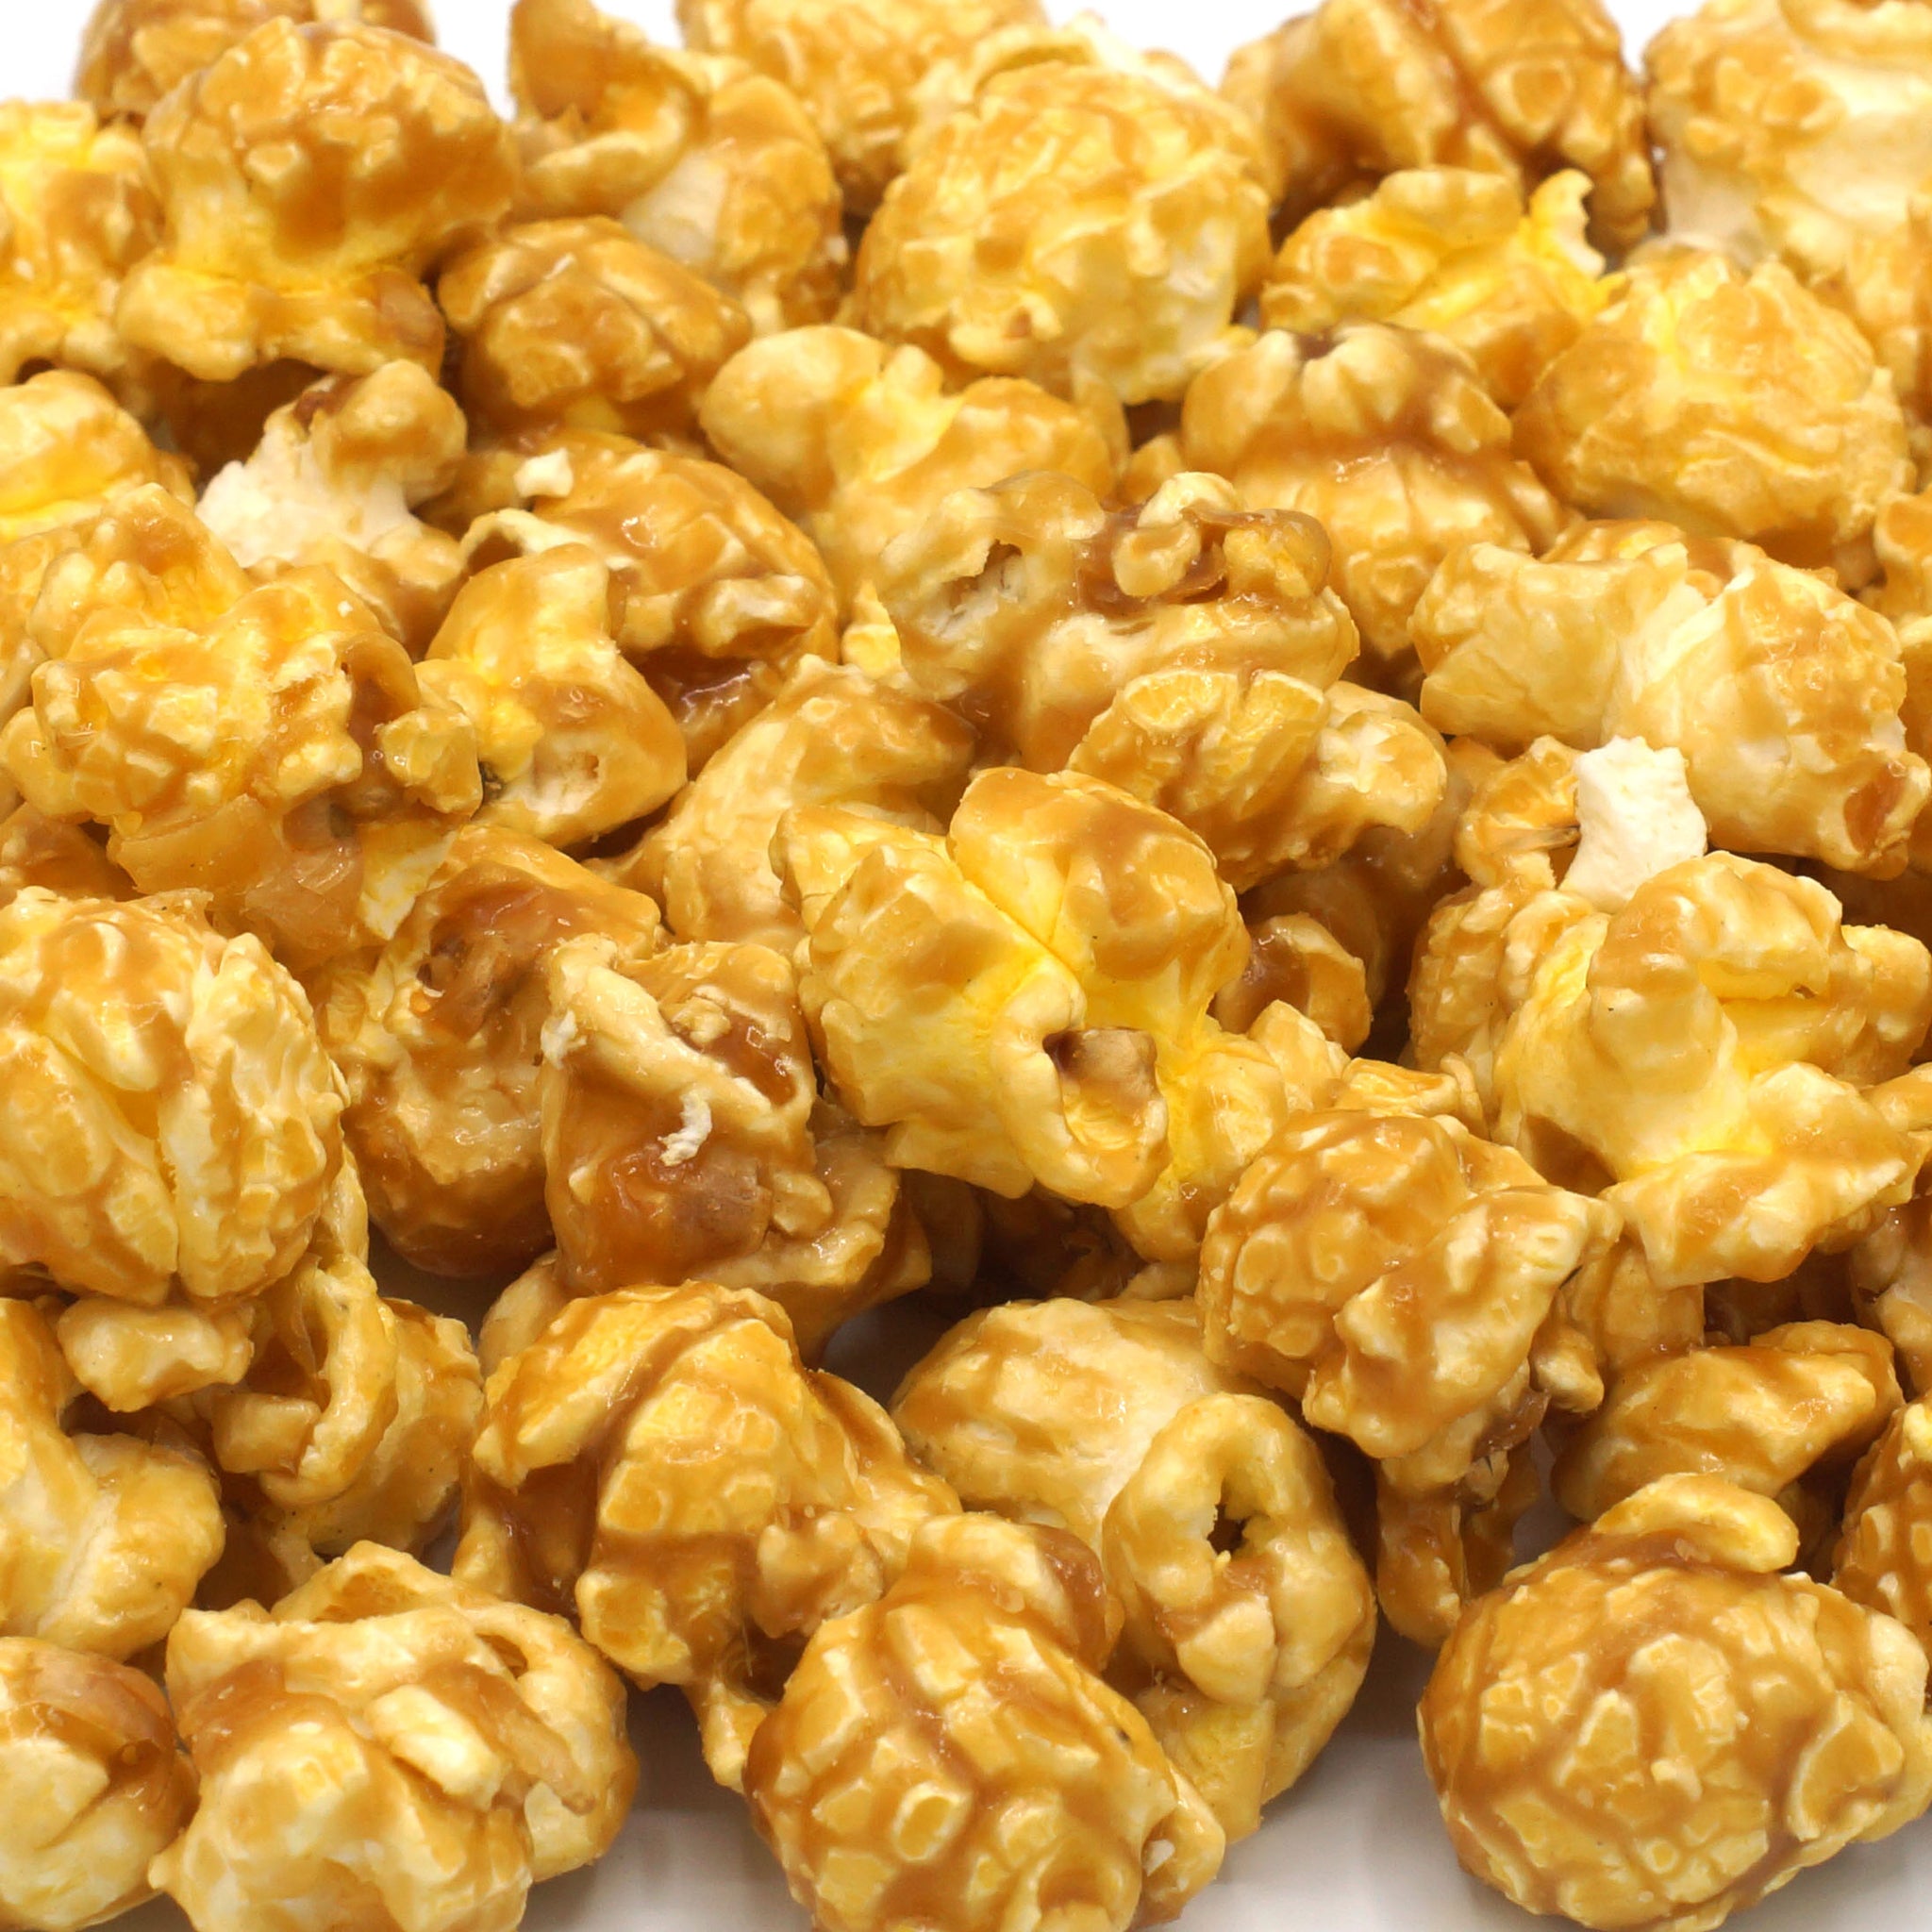 Caramel Popcorn